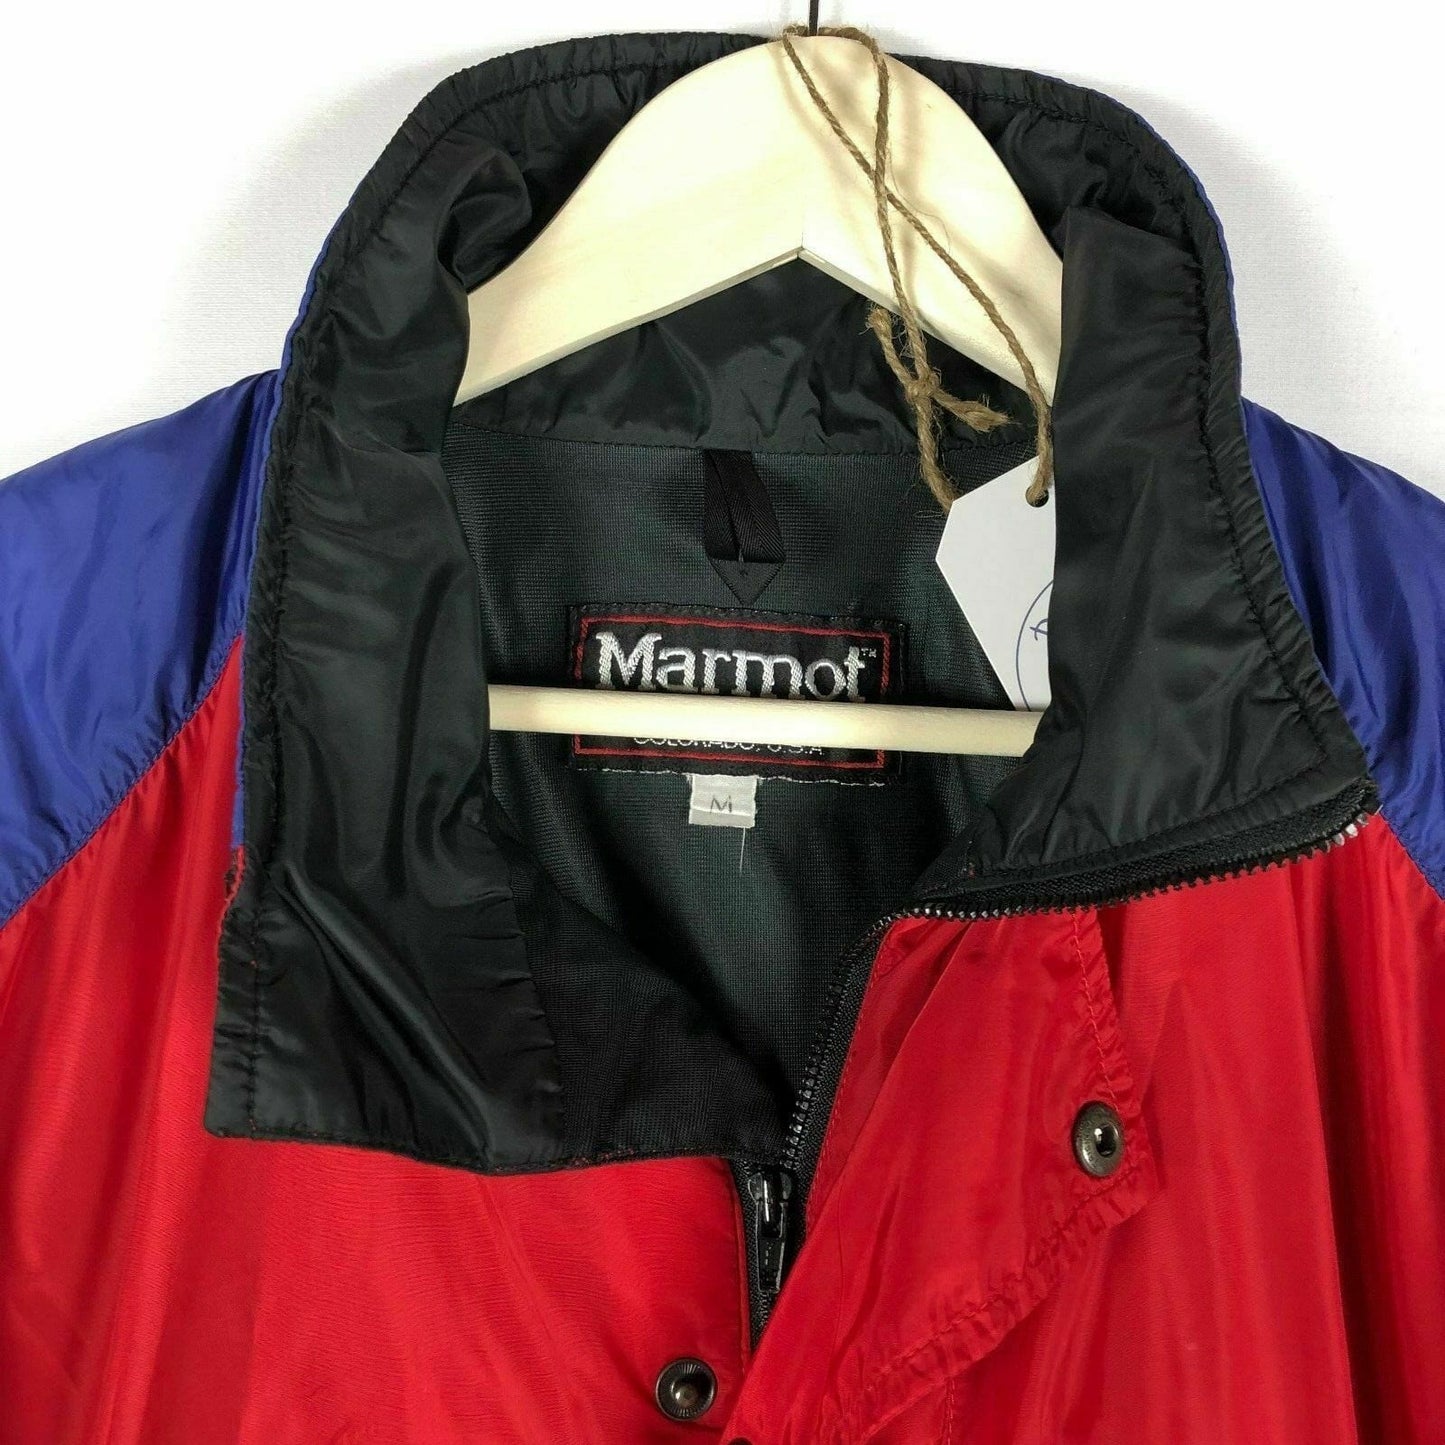 Marmot Mens Size M Red Weatherproof Jacket Hooded GoreTex Windbreaker Coat